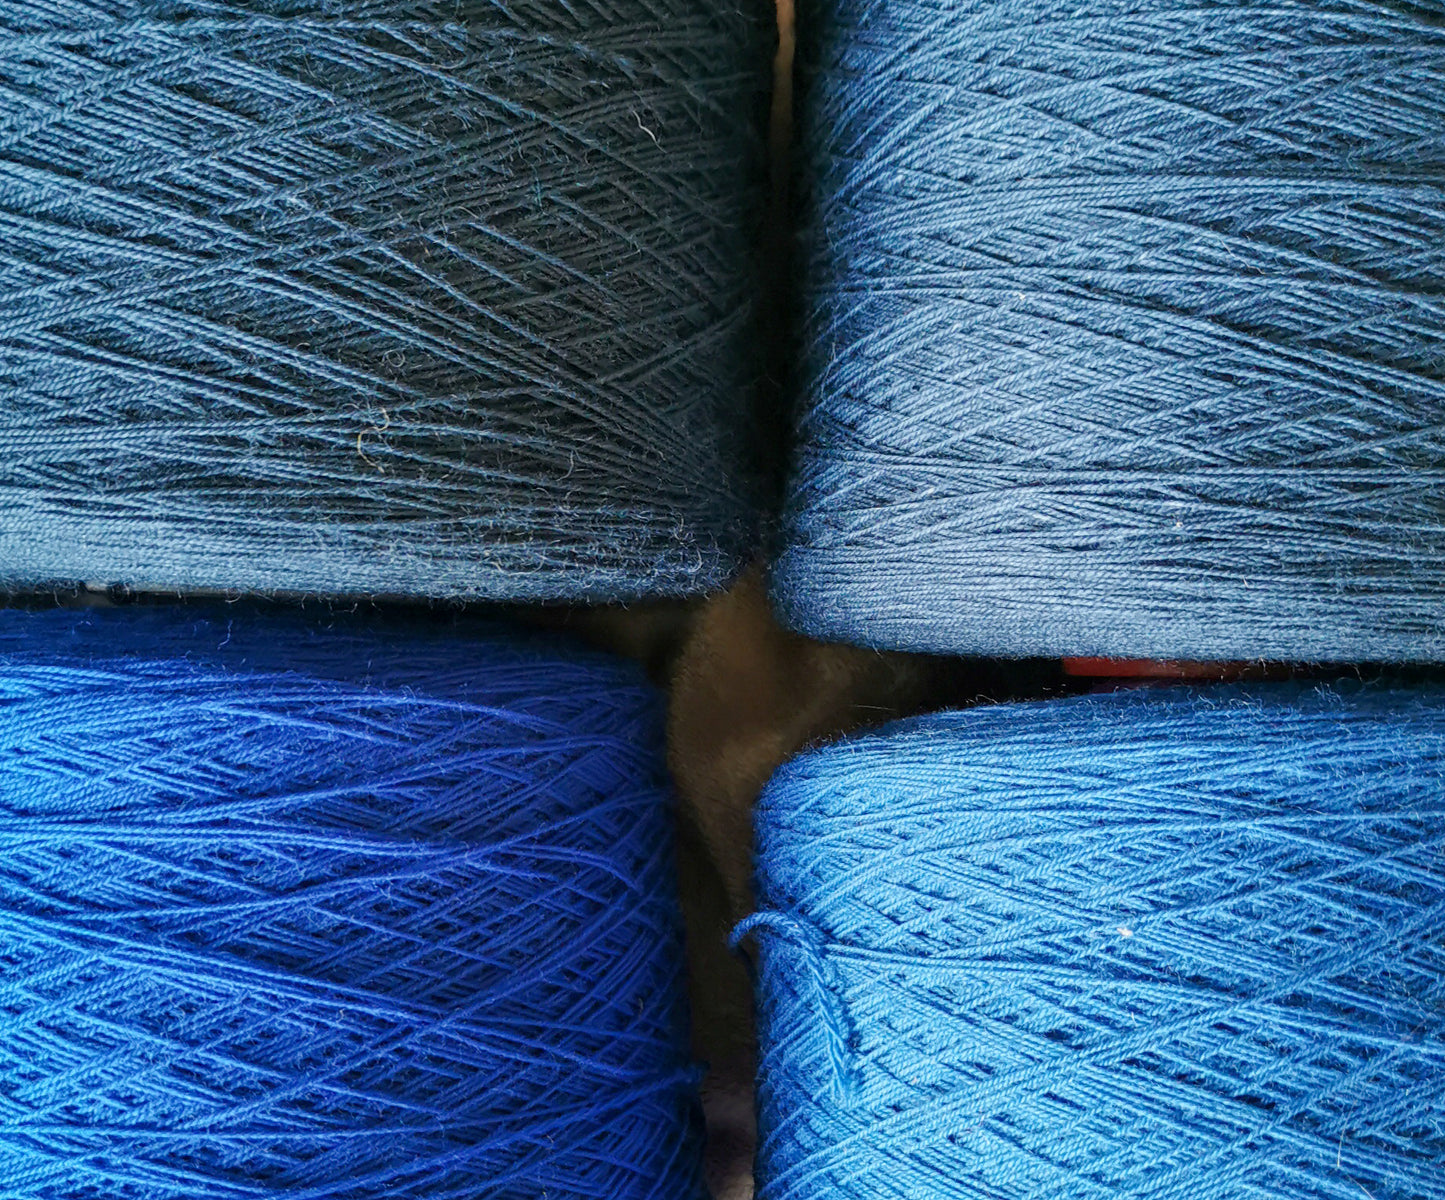 wool/nylon blend yarn in navy1 blue